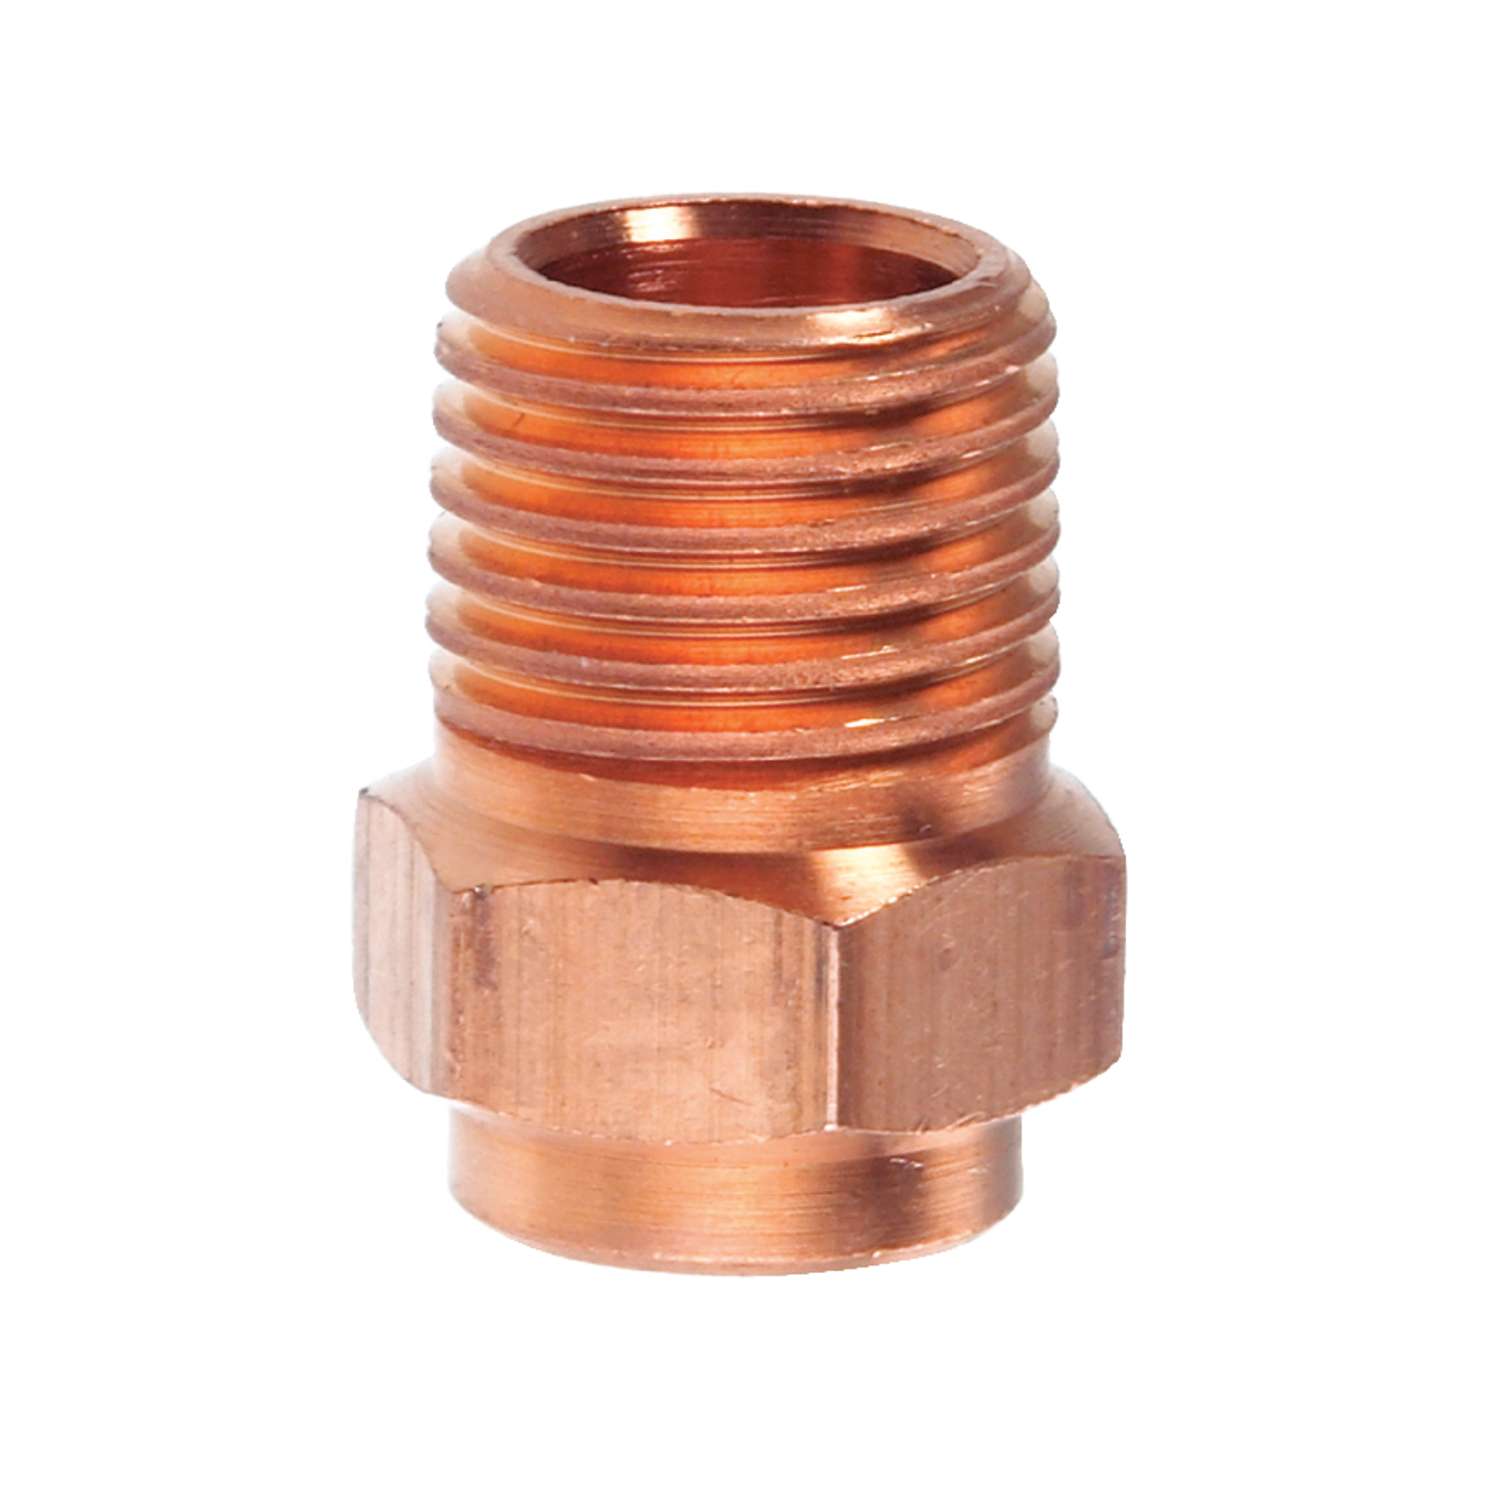 1/2" Copper Male Adapter MA NPT Pressure Sweat Solder New 12 PACK 